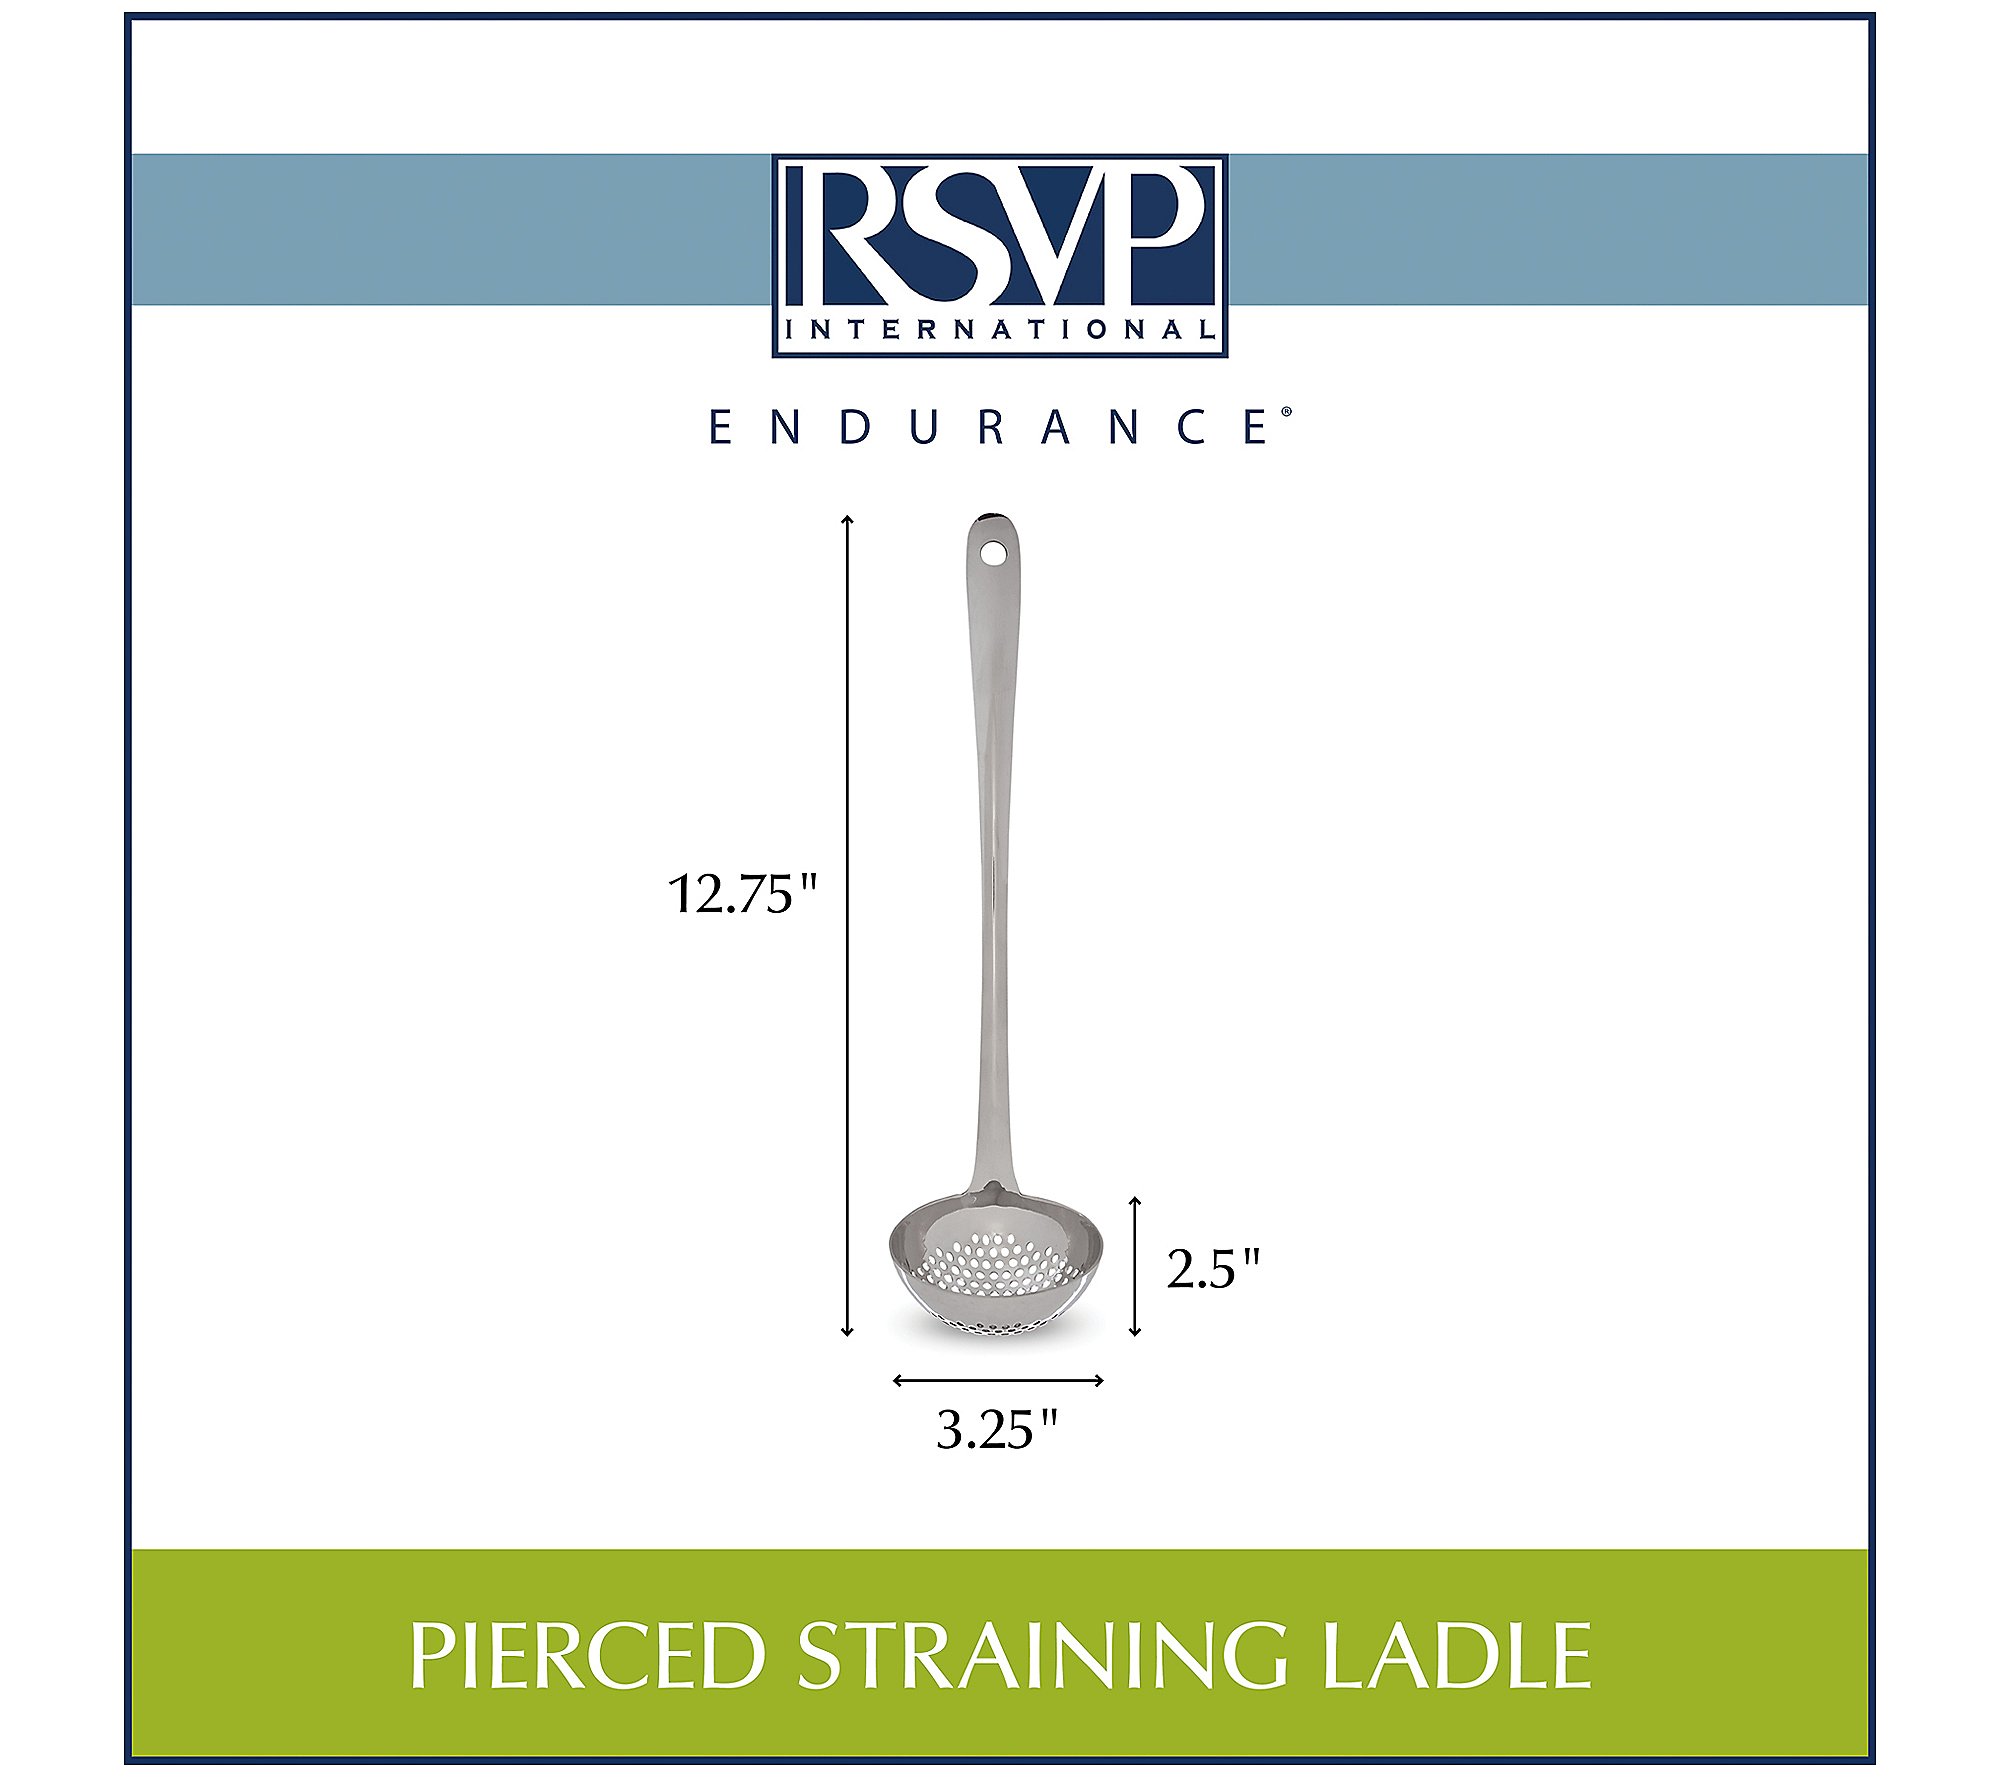 RSVP Endurance Pierced Straining Ladle